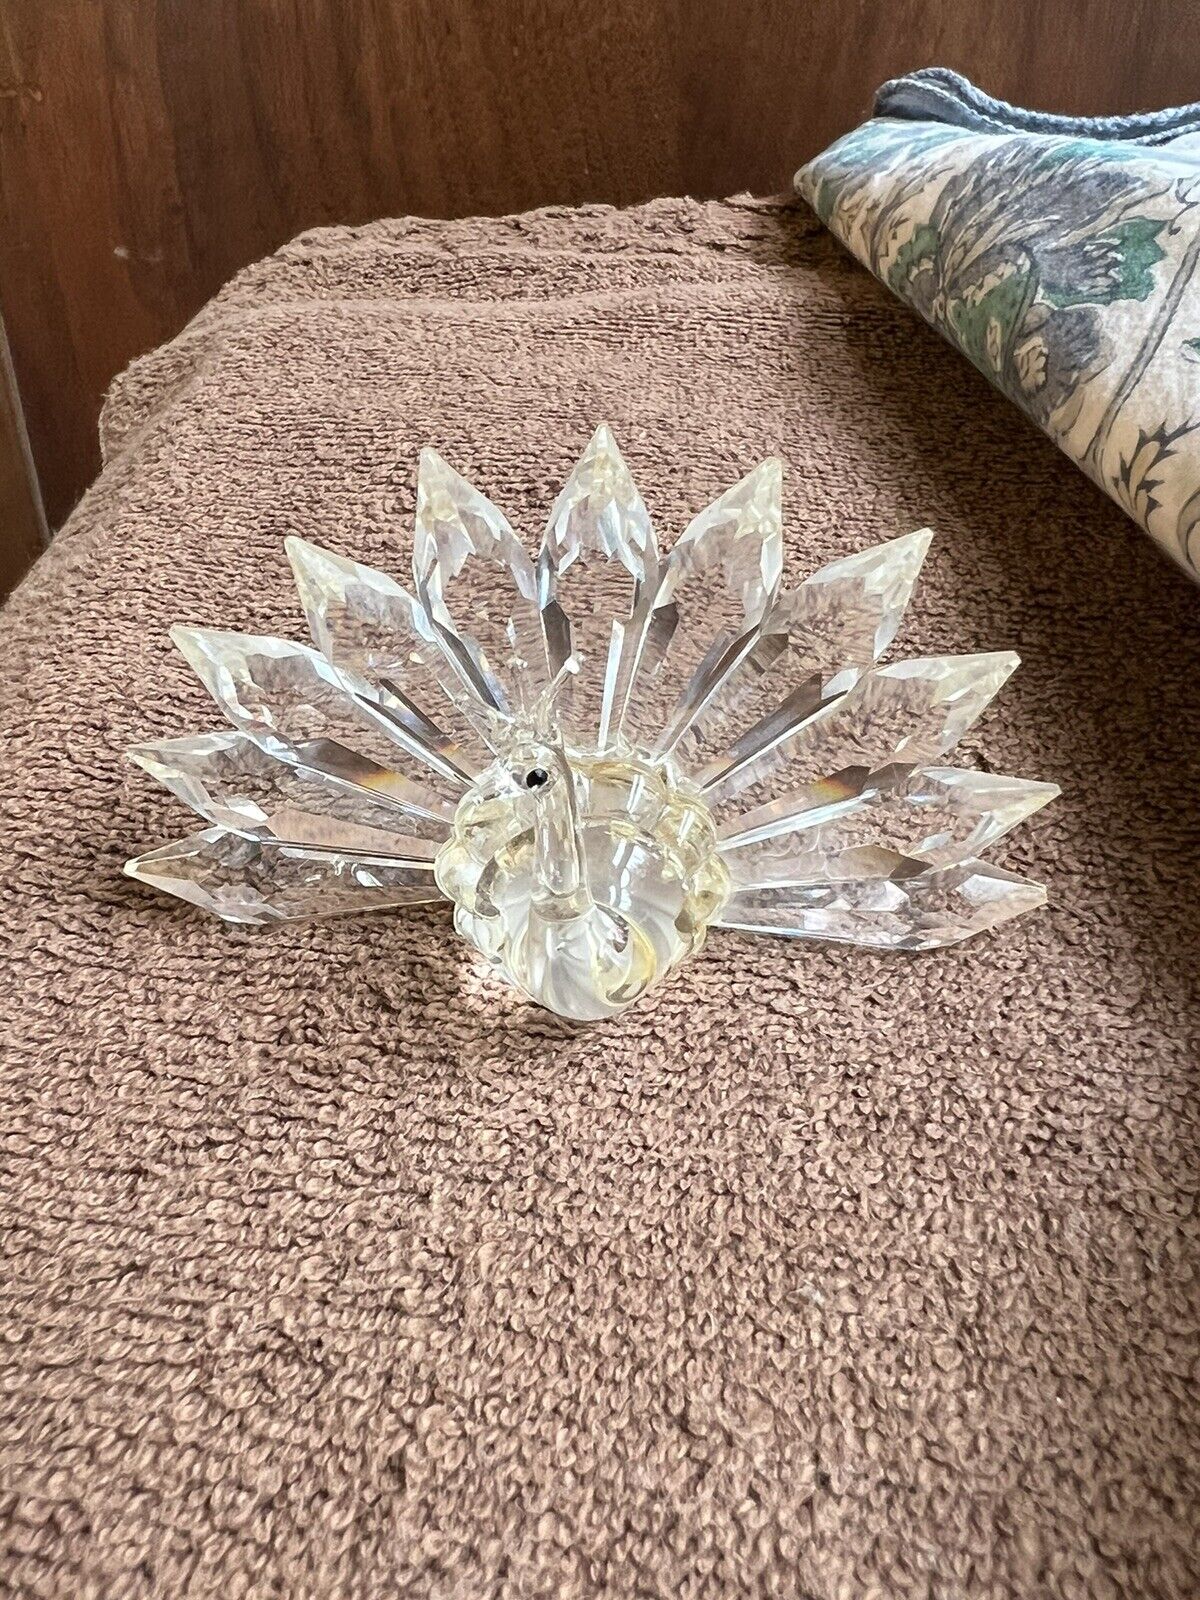 Iris Arc Peacock Crystal Figurine Good Condition